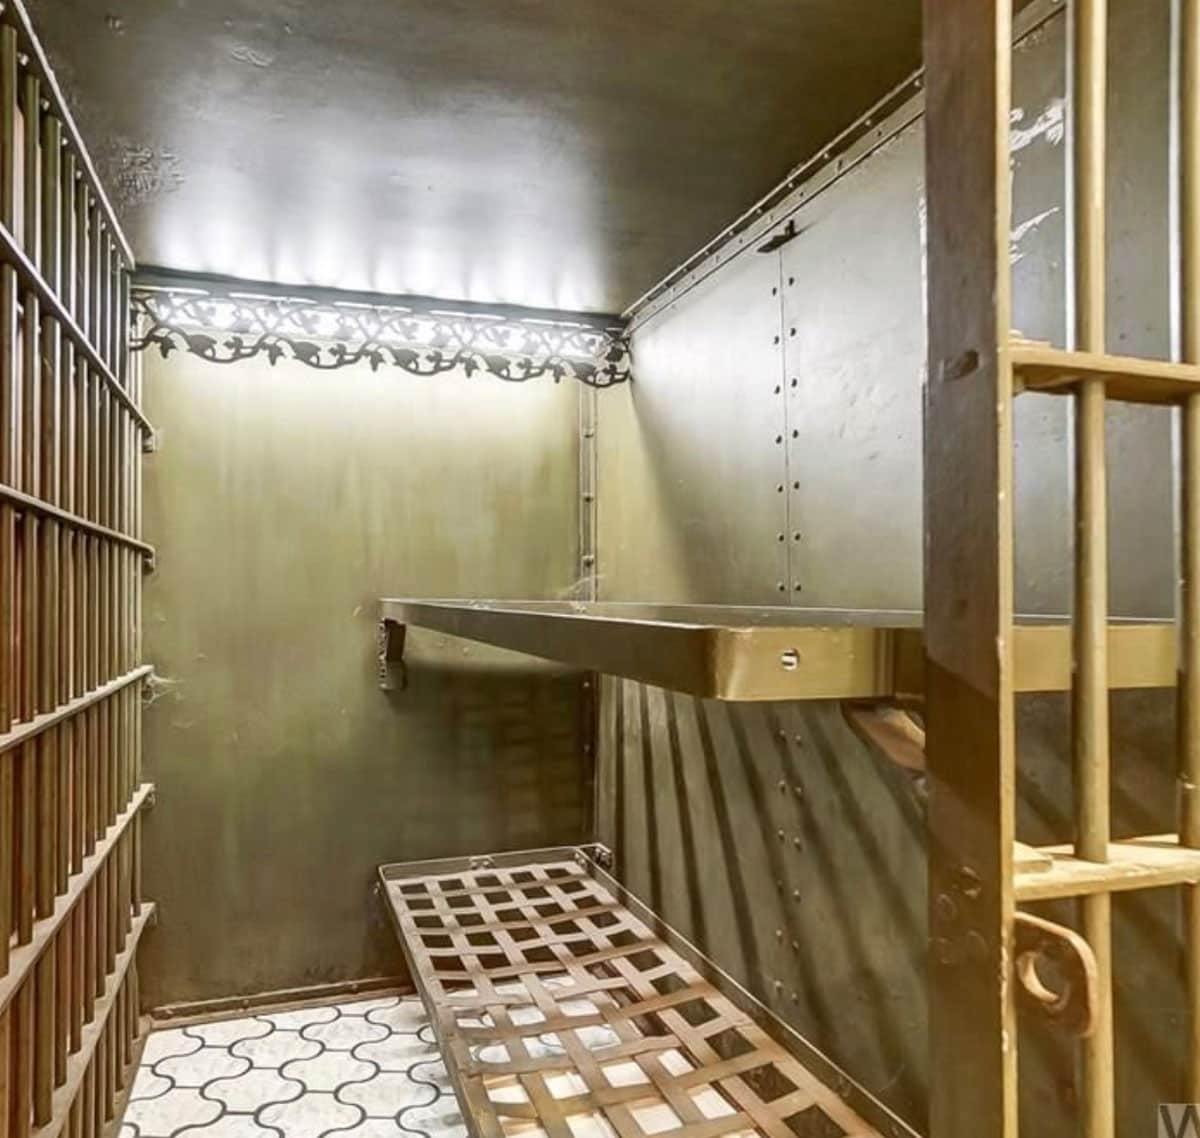 117 N. Brandon Ave. Celina, OH prison cells